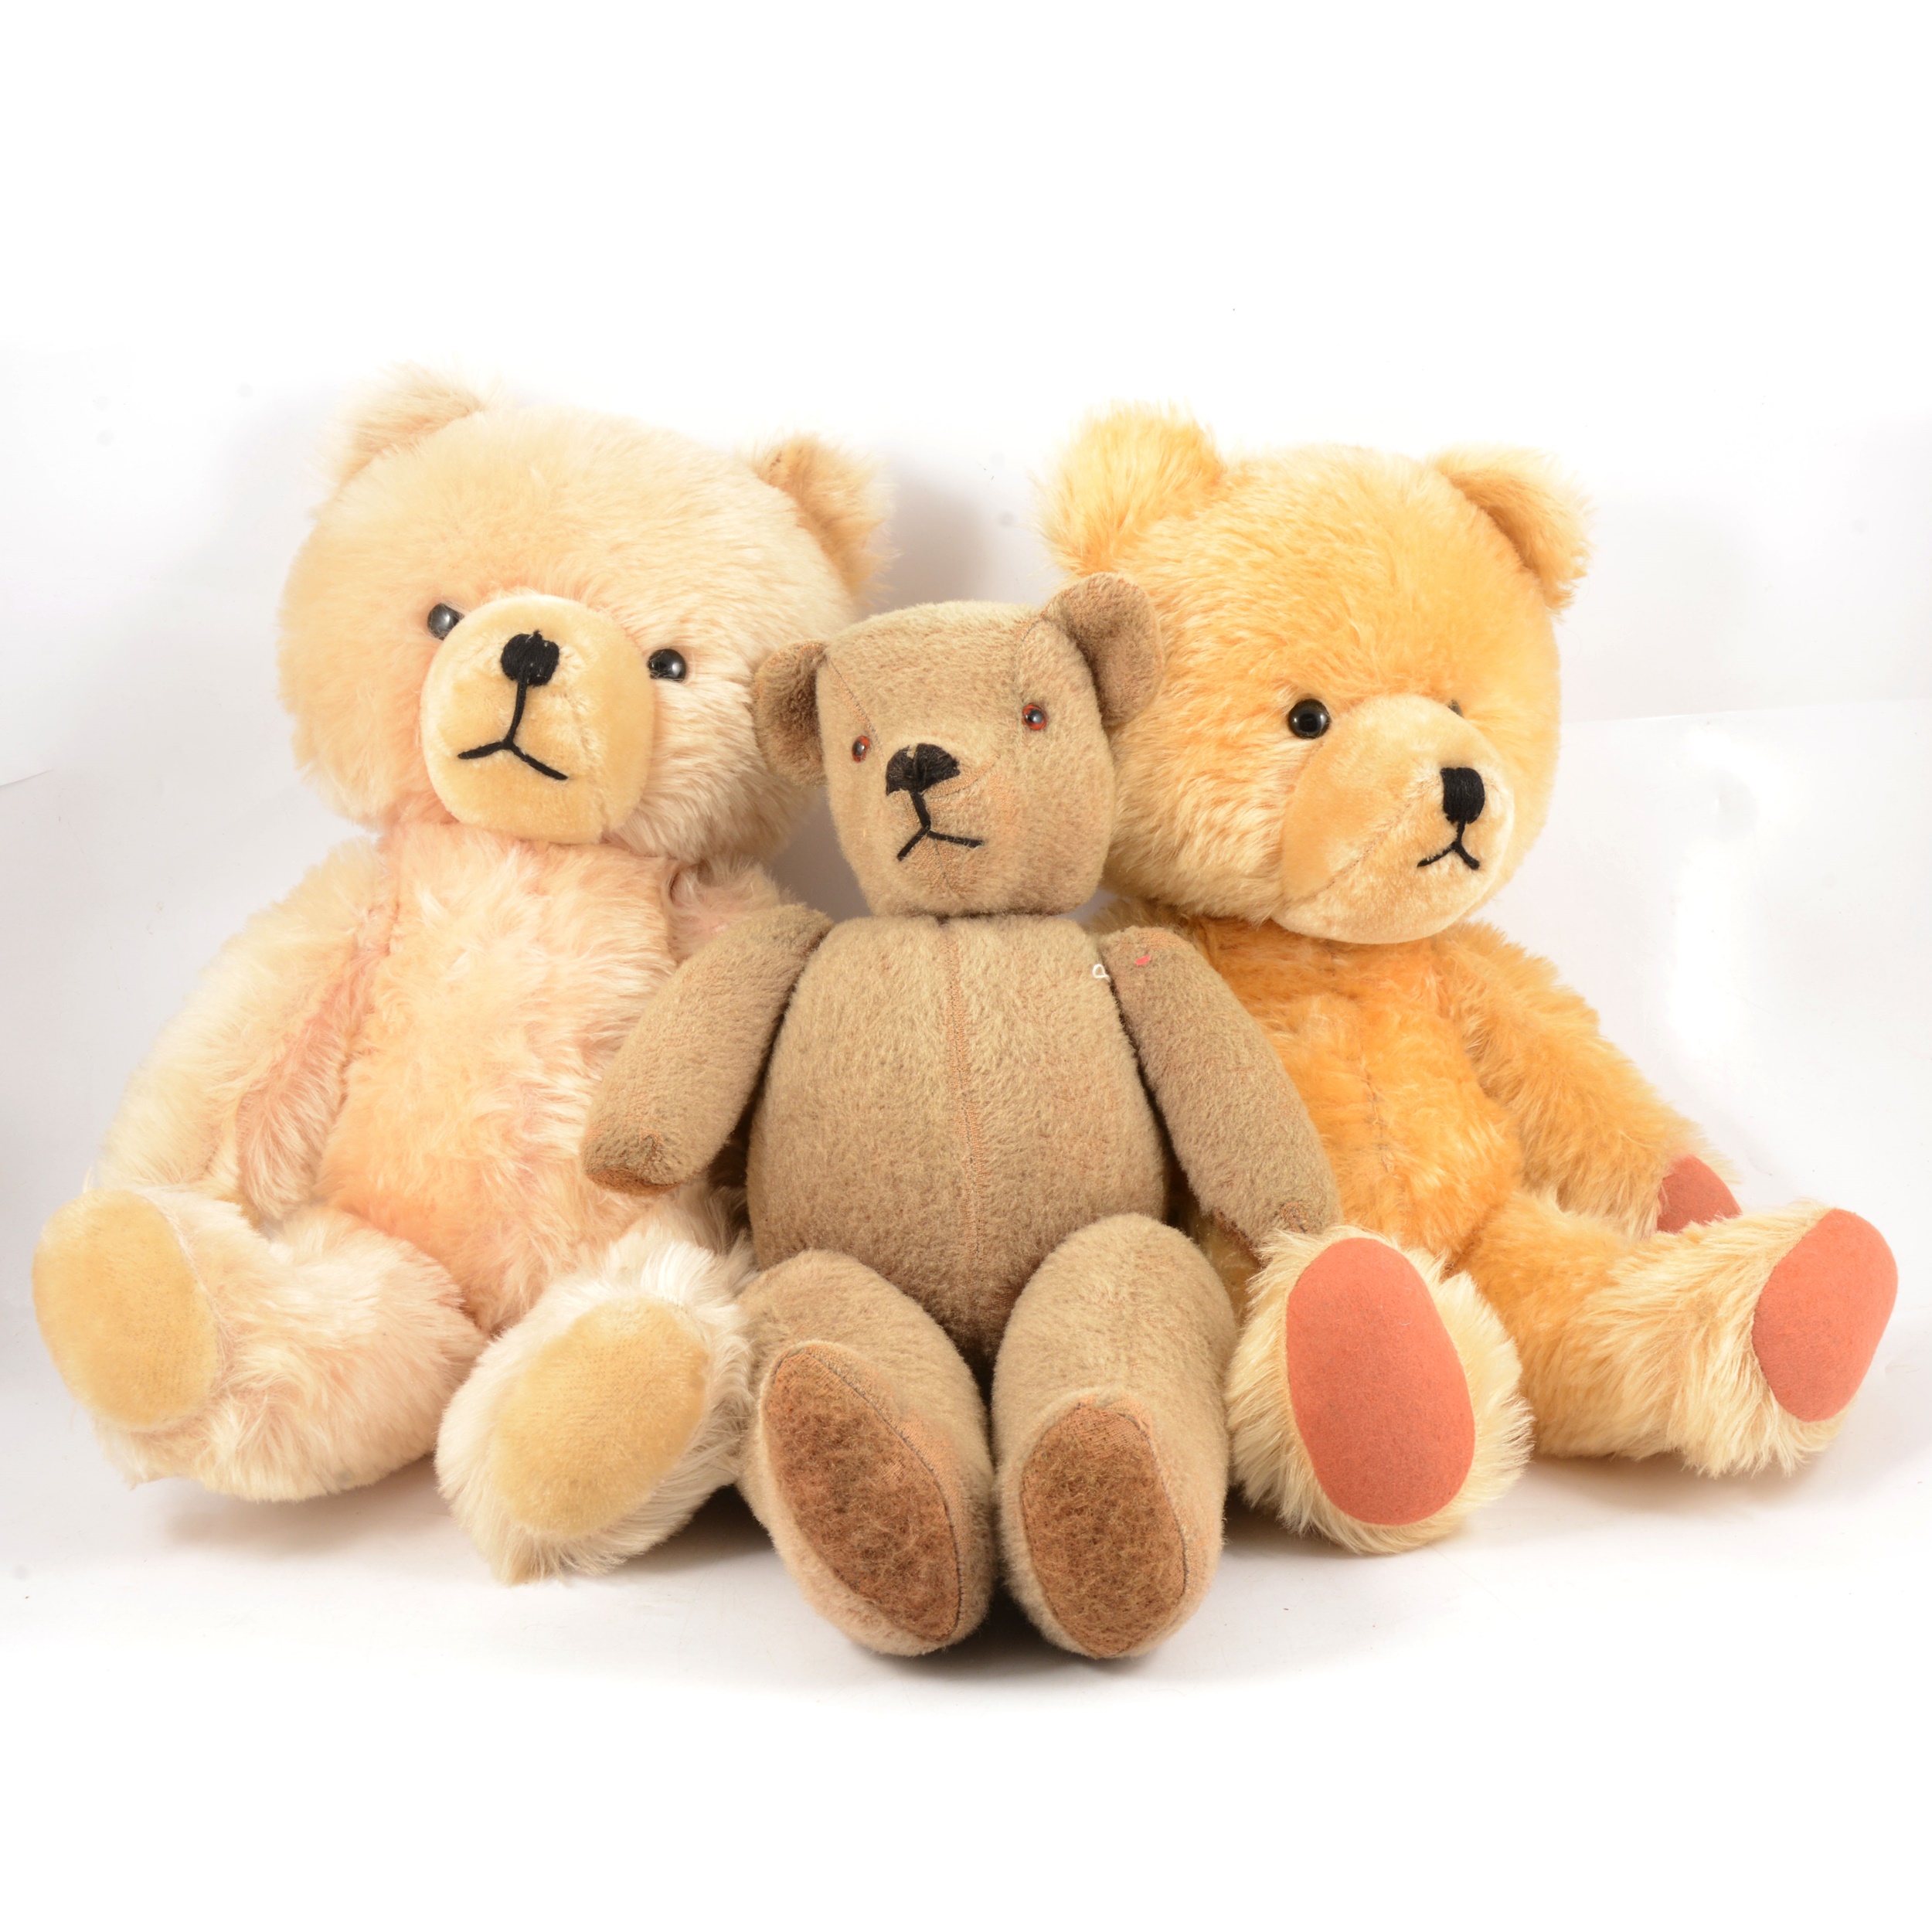 Three mid-century teddy bears.